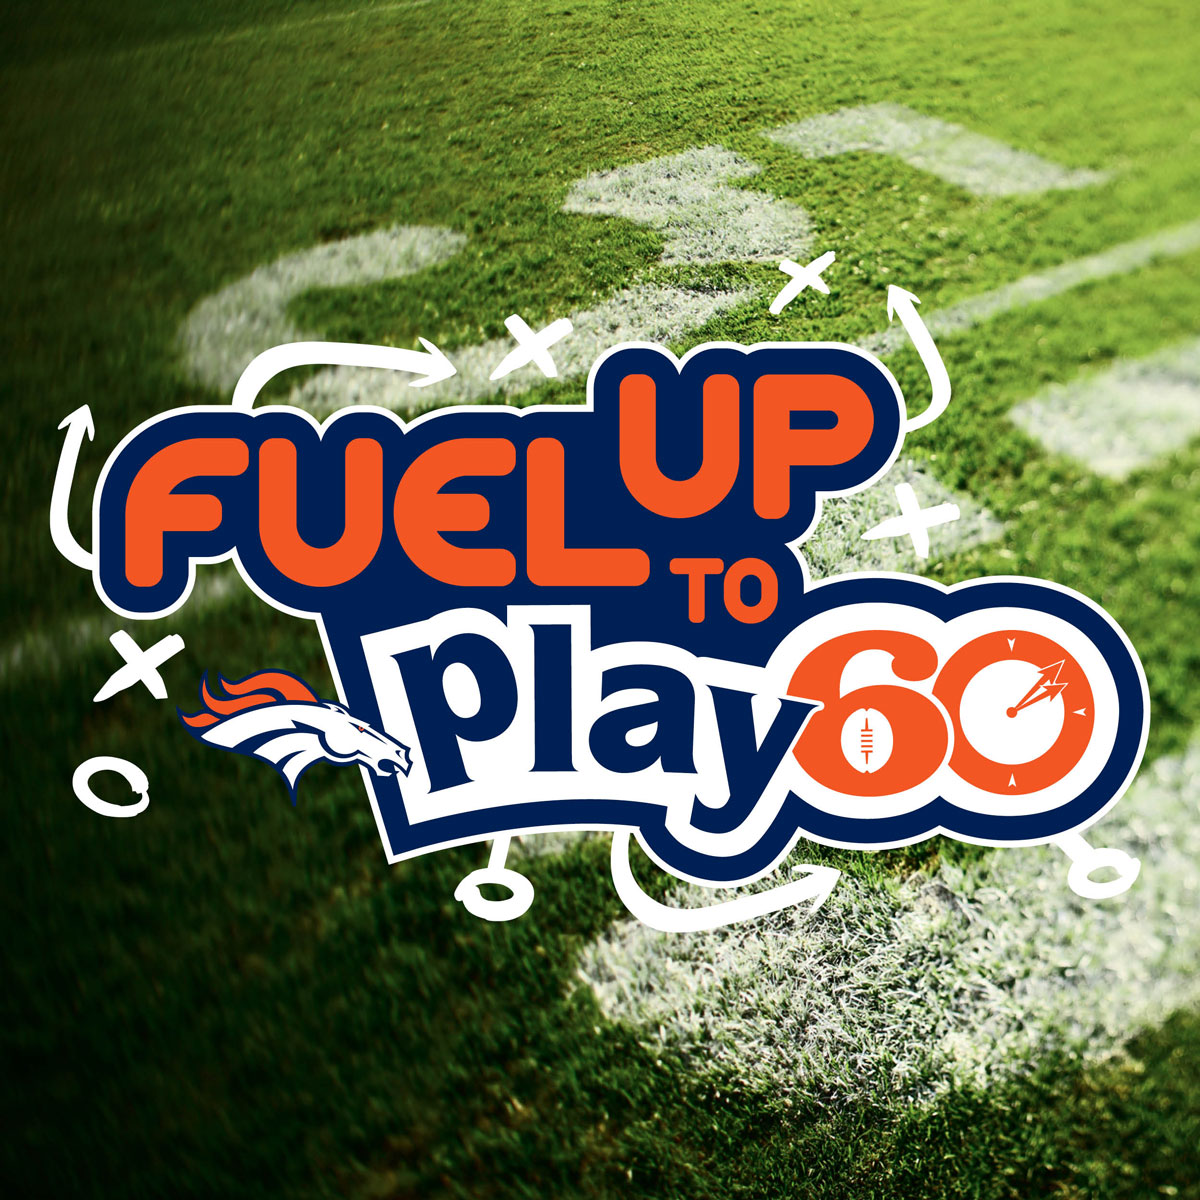 broncos fuel up to play 60 logo